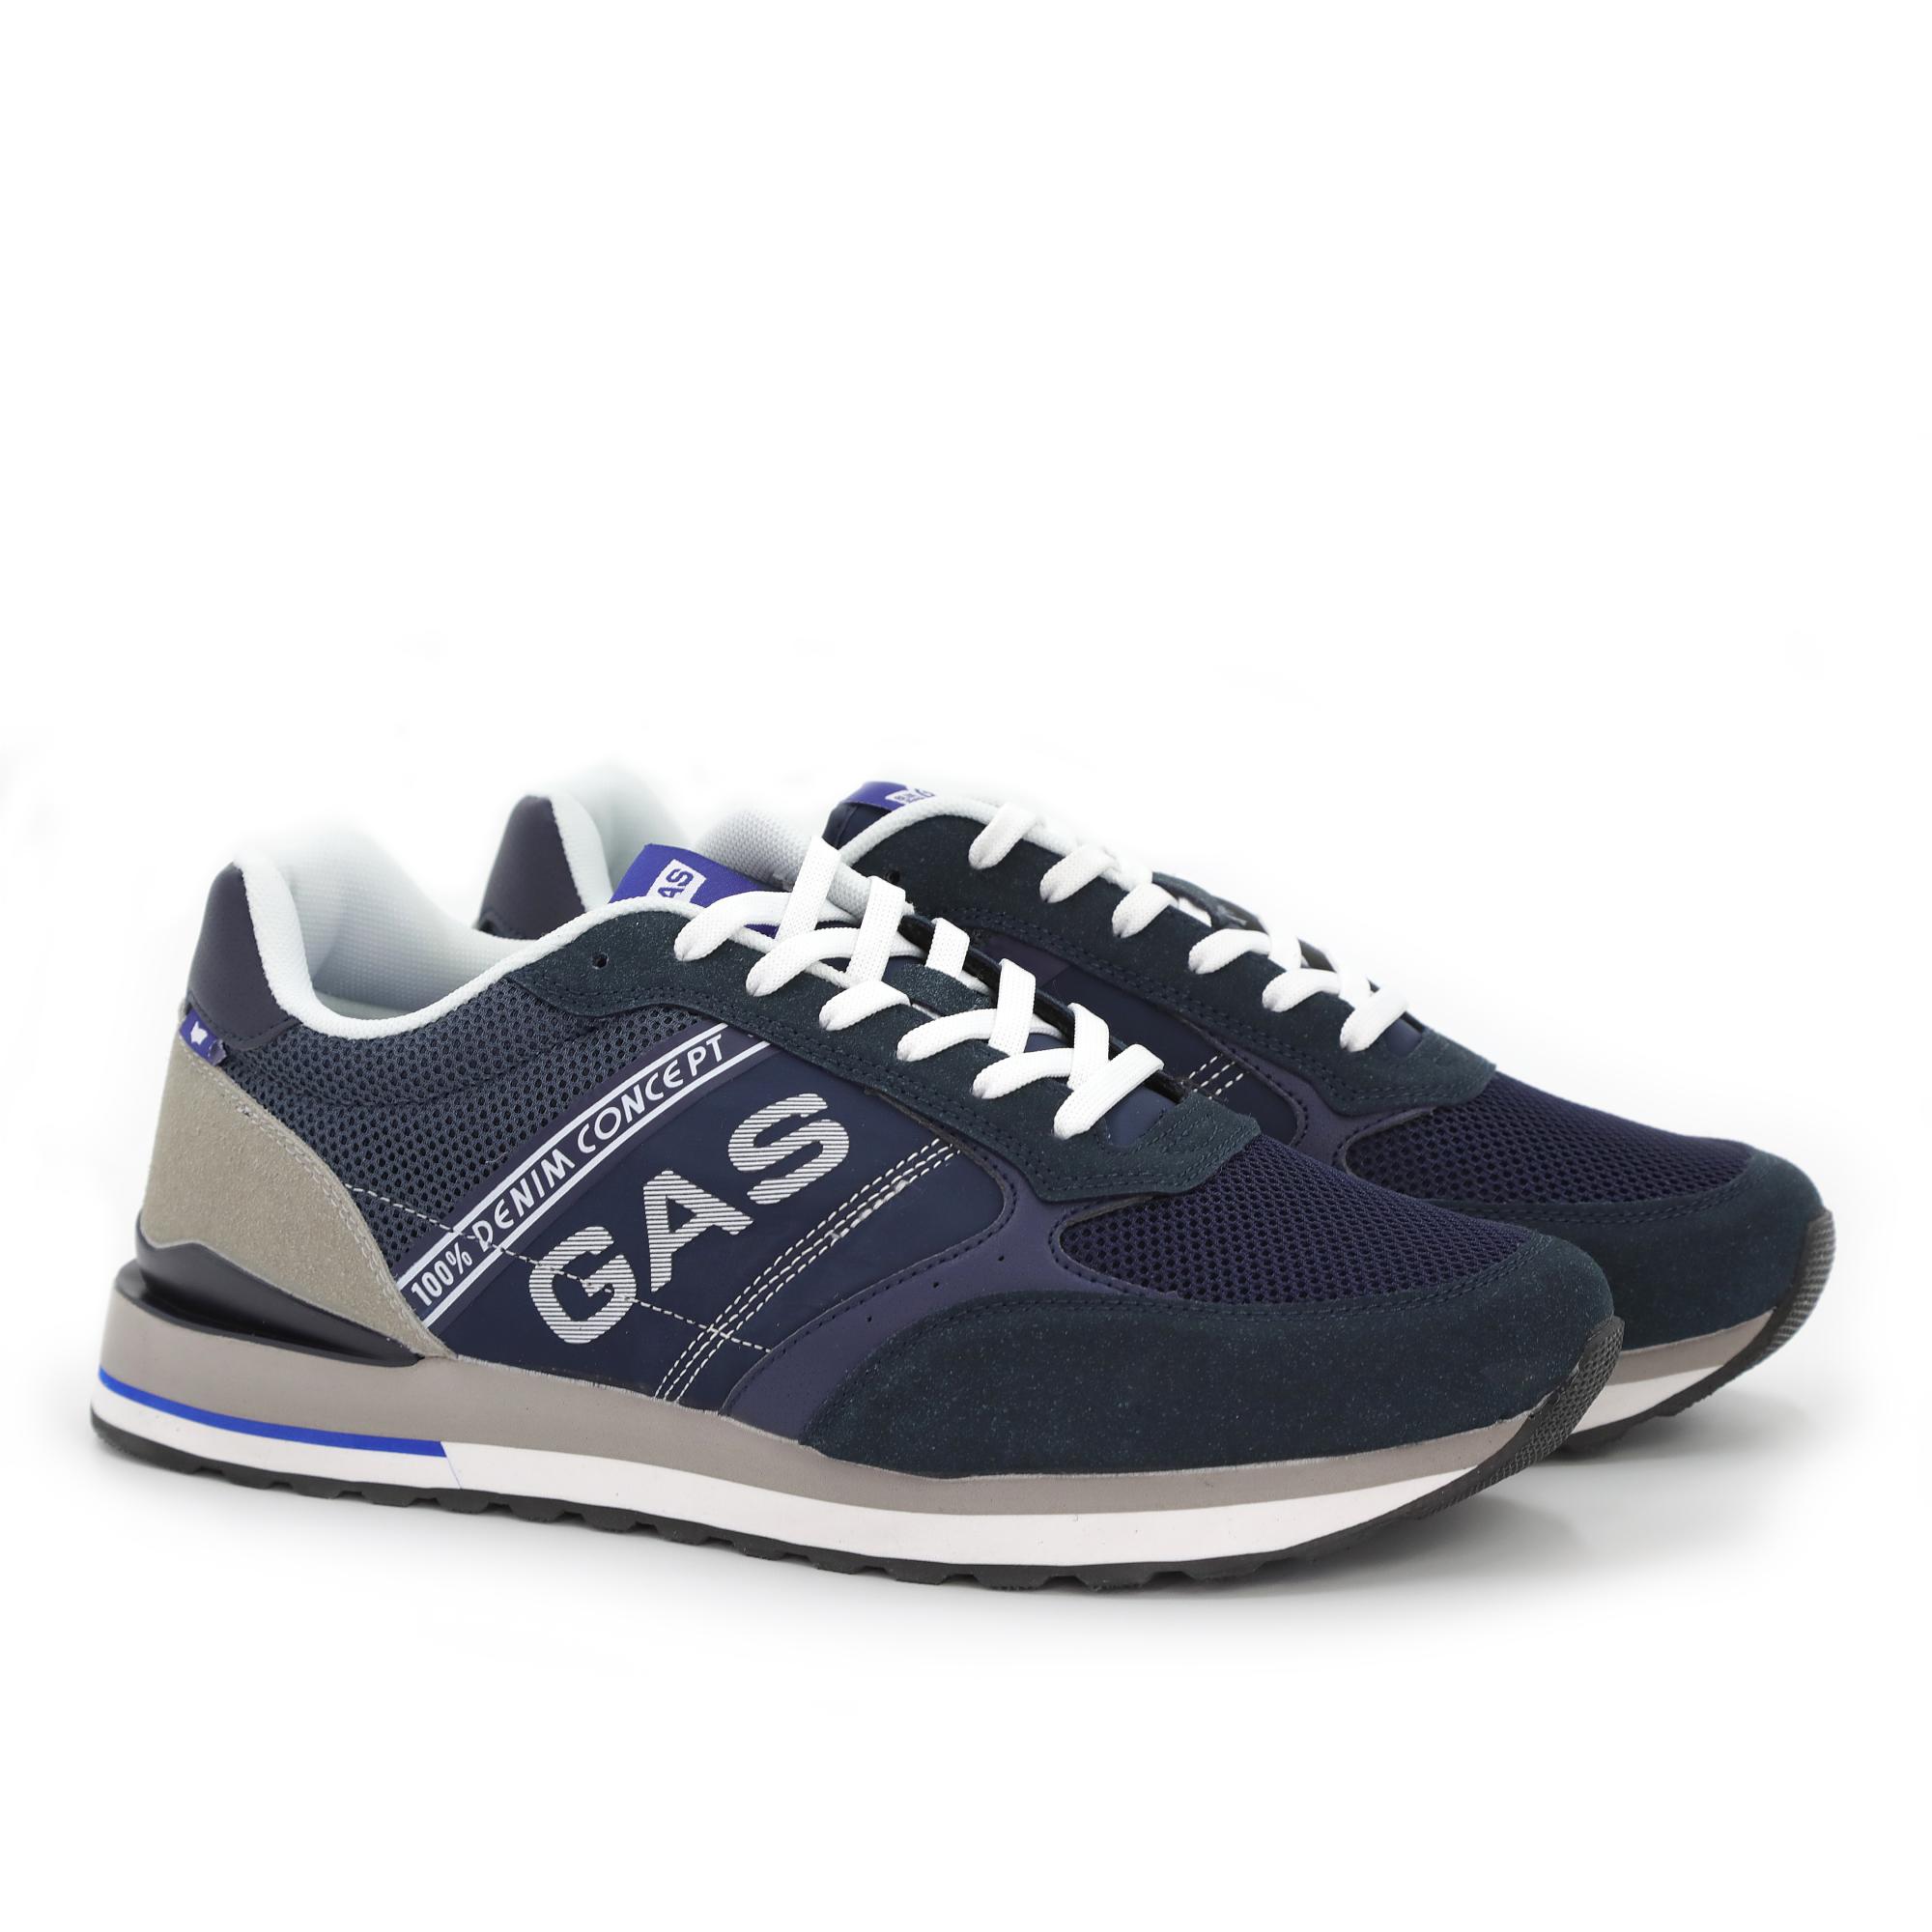 Мужские кроссовки GAS, синие, цвет синий, размер 41 - фото 1